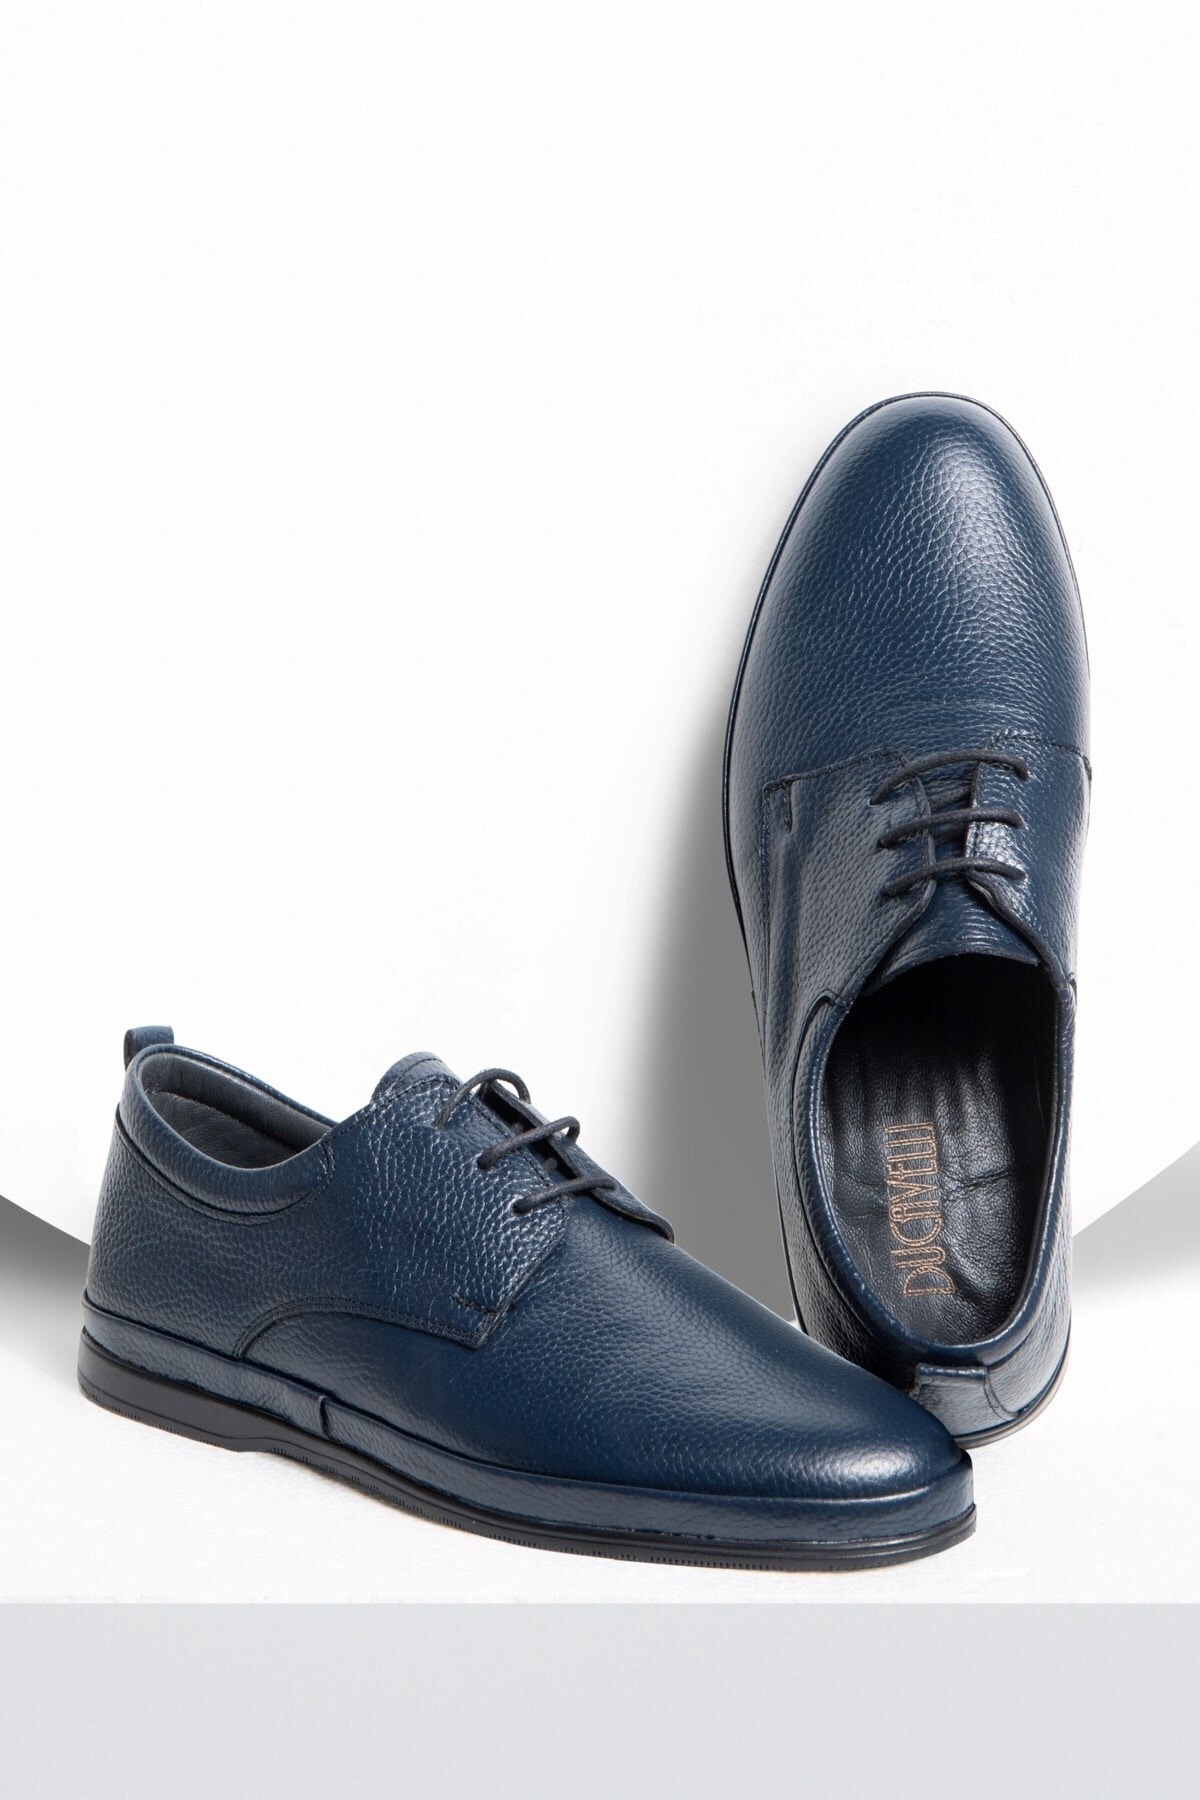 Ducavelli Otrom Genuine Leather Comfort Orthopedic Men's Casual Shoes, Dad Shoes, Orthopedic Shoes. im Sale-ducavelli 1